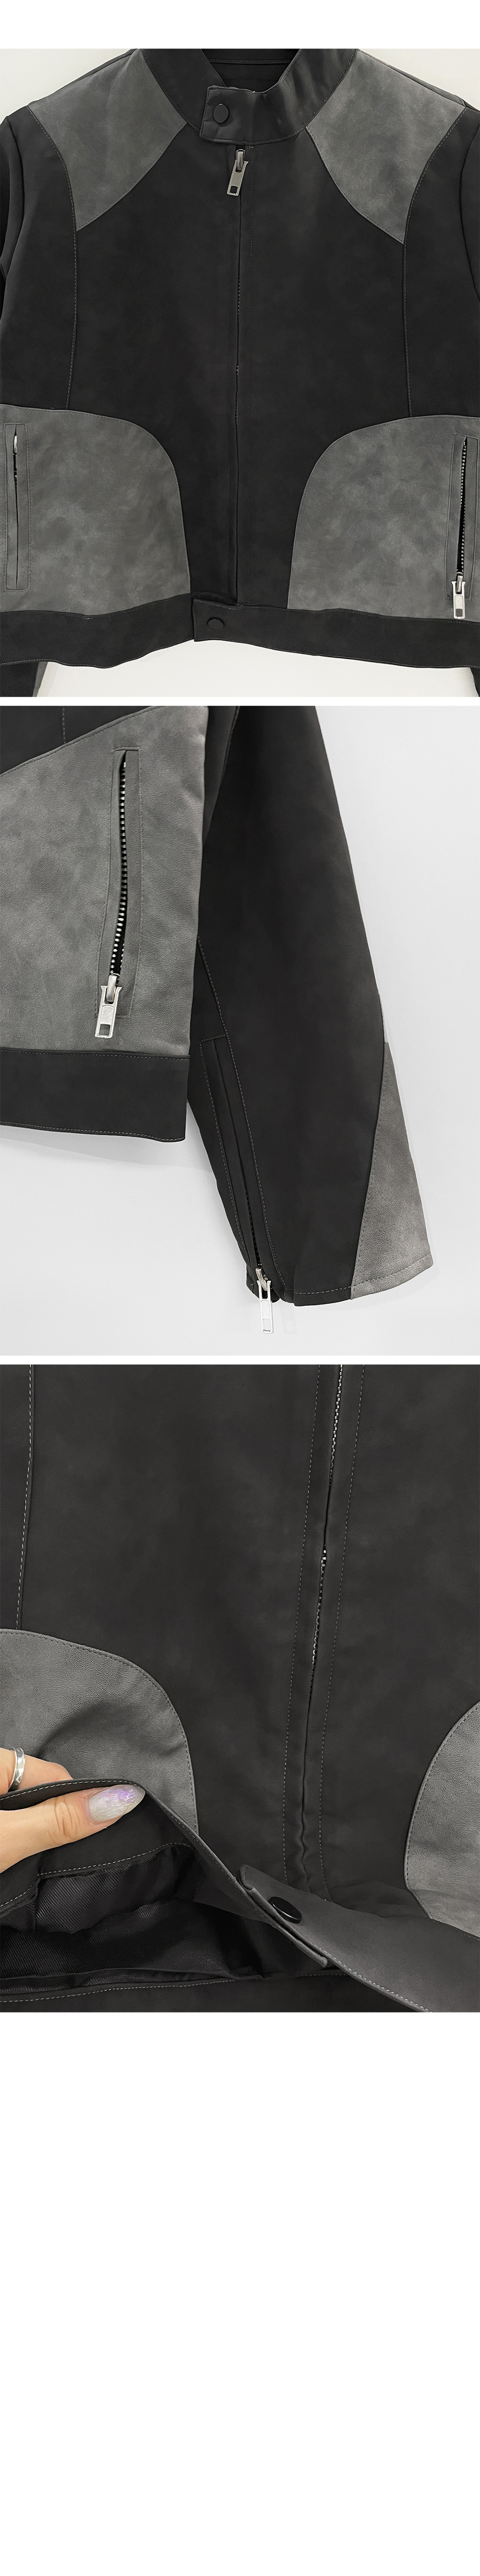 jacket detail image-S1L11